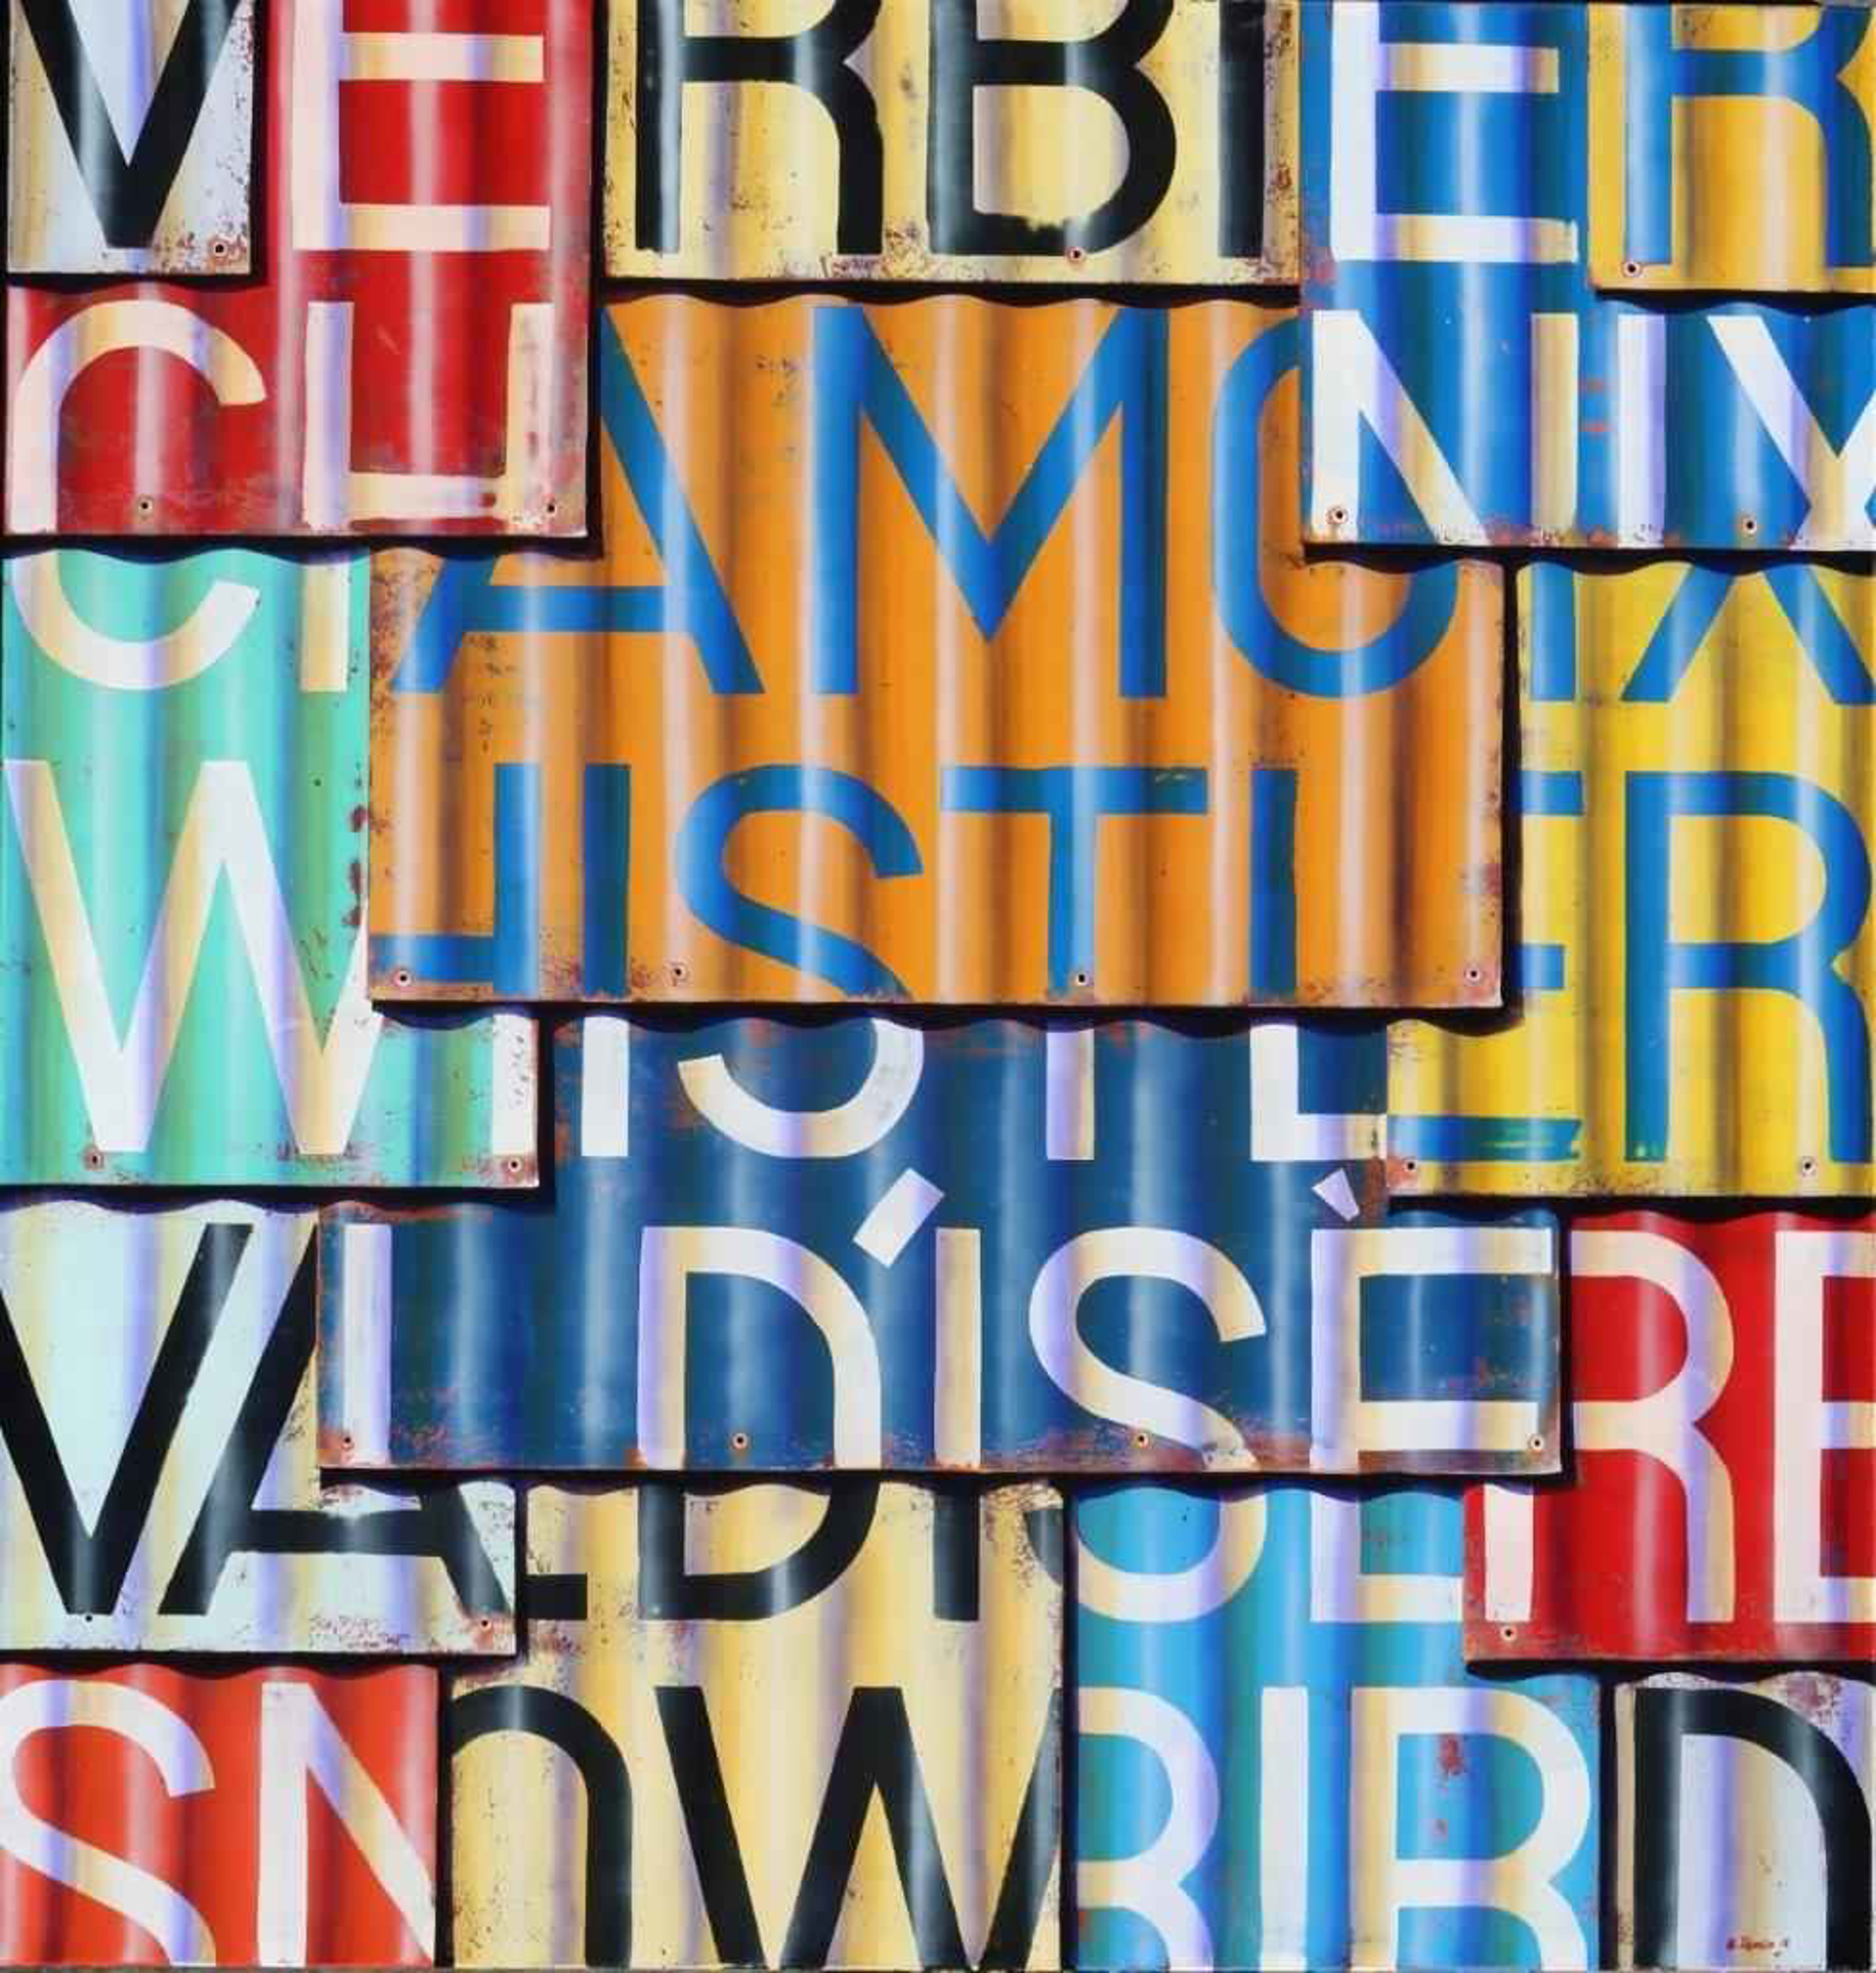 Snowbird by Ross Tamlin